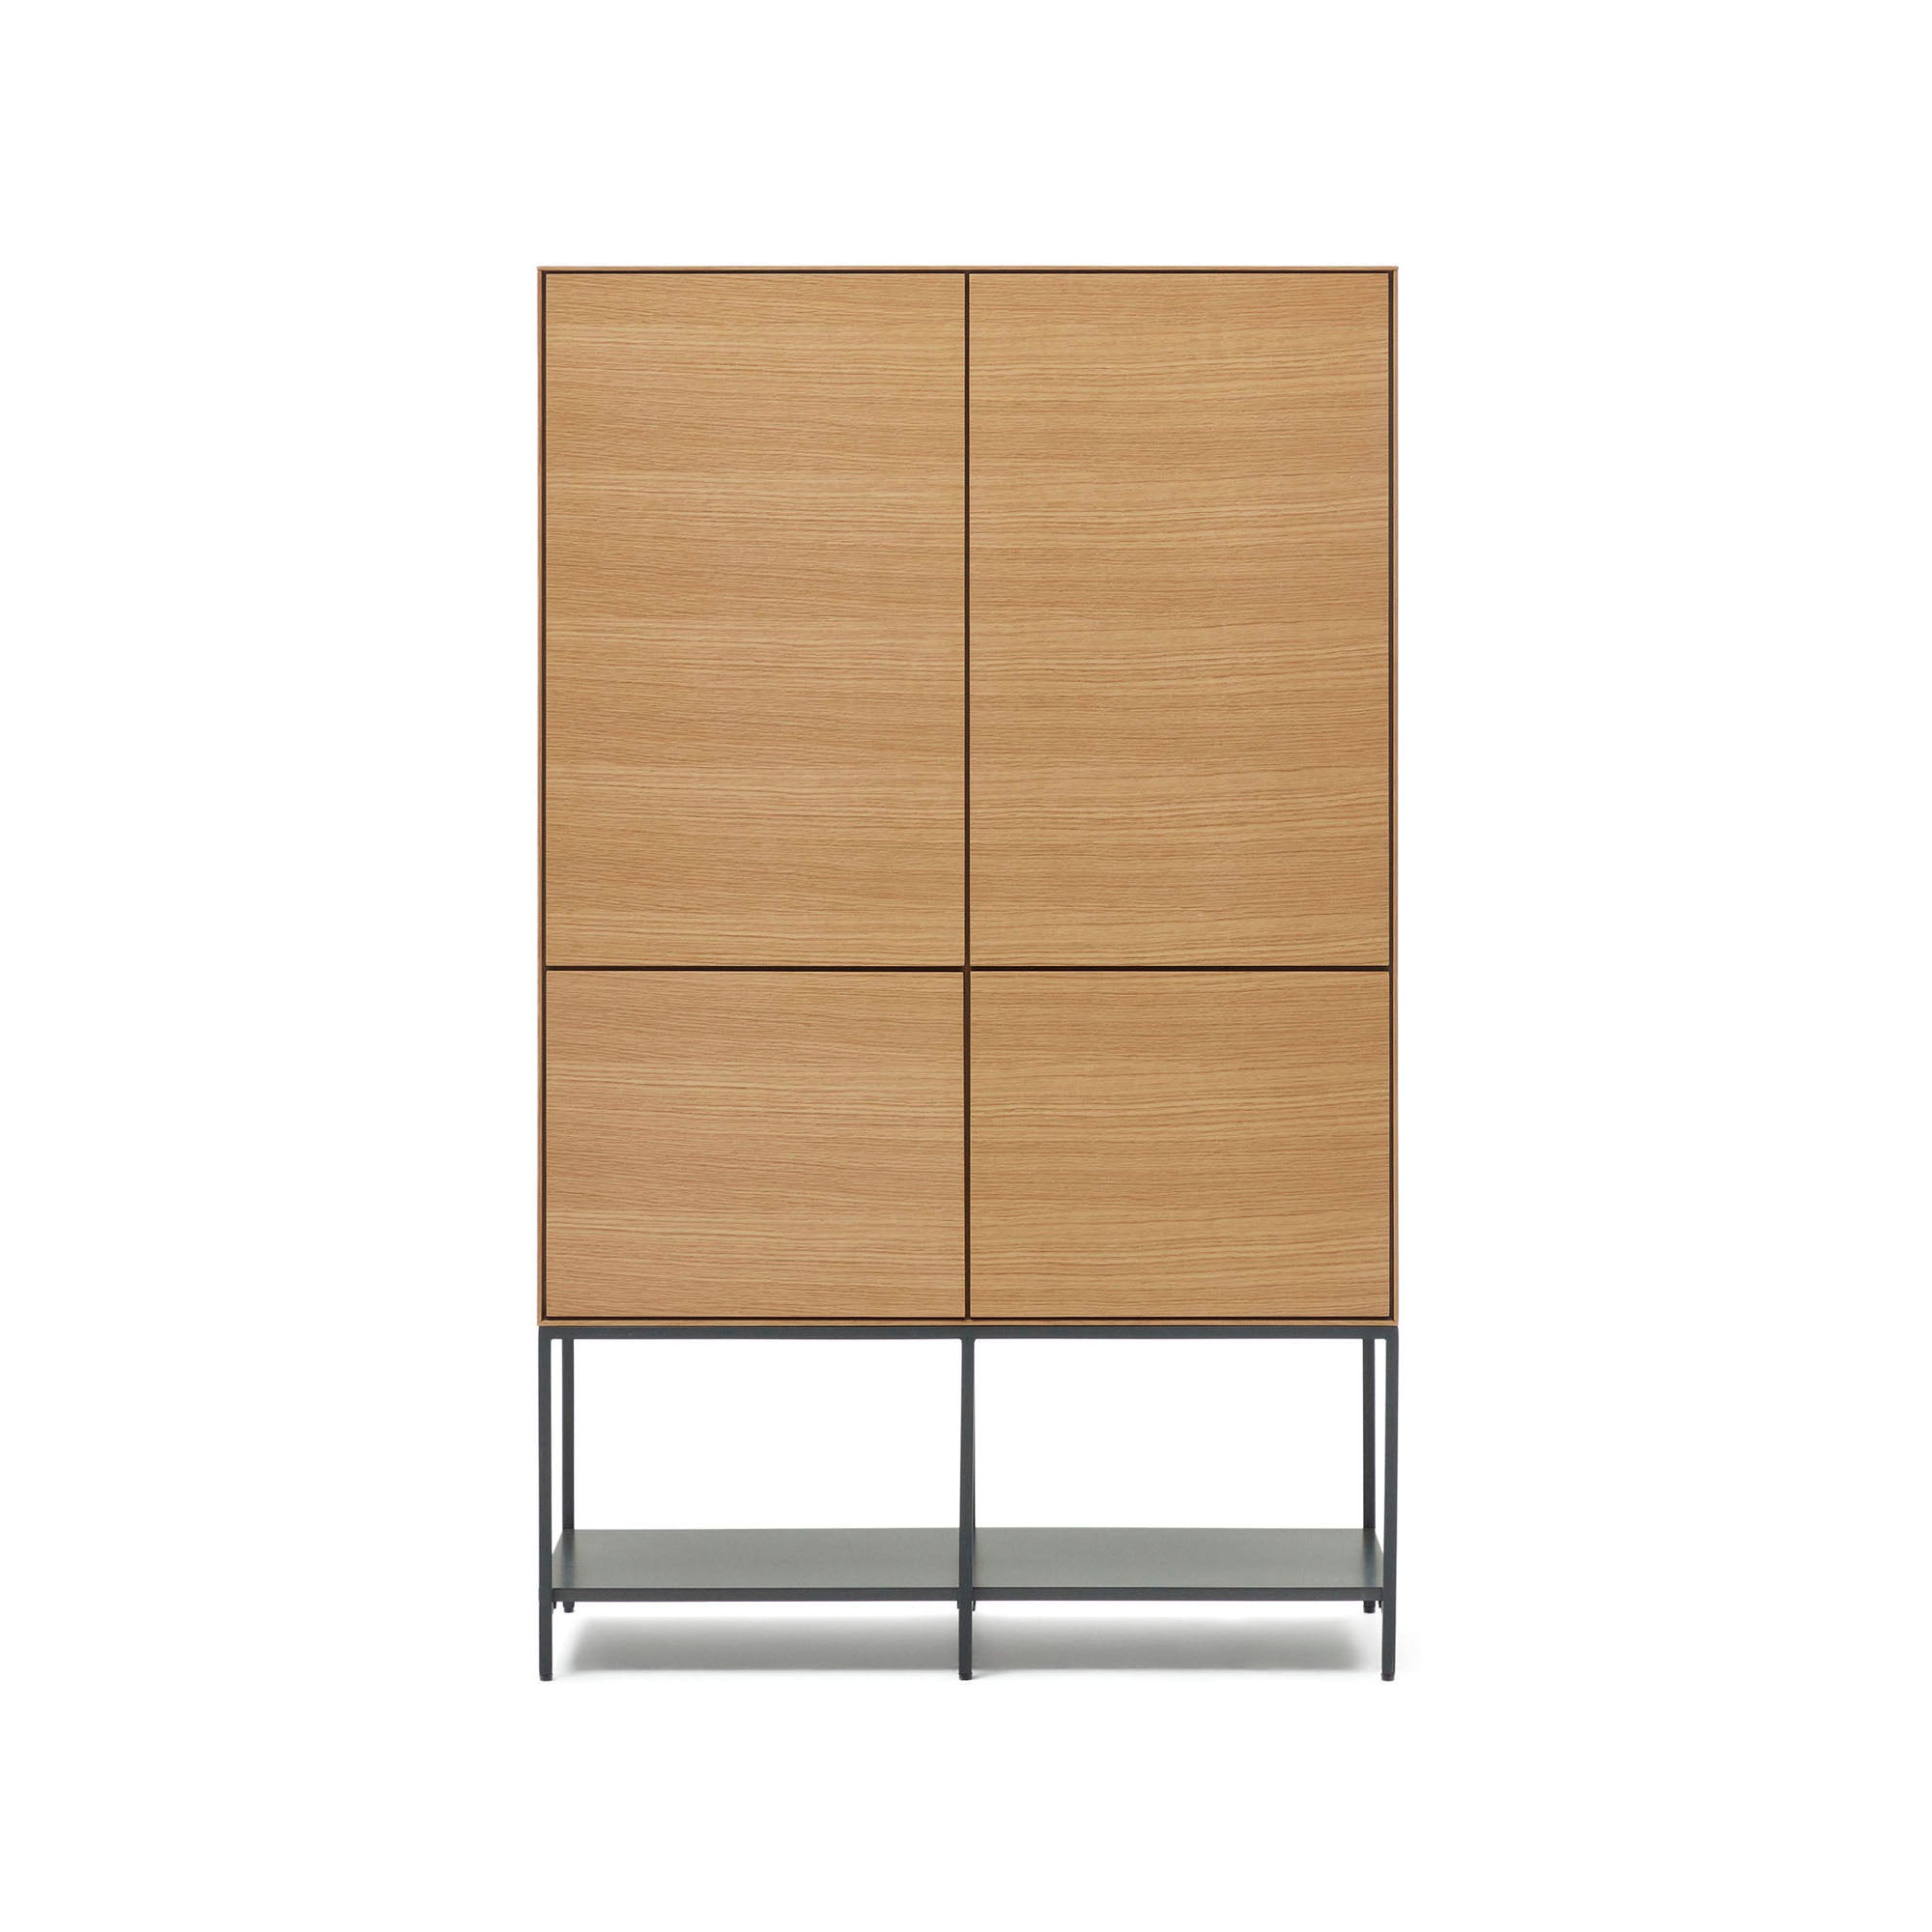 Vedrana 4 door tall sideboard in oak veneer with steel legs, 97.5 x 160 cm